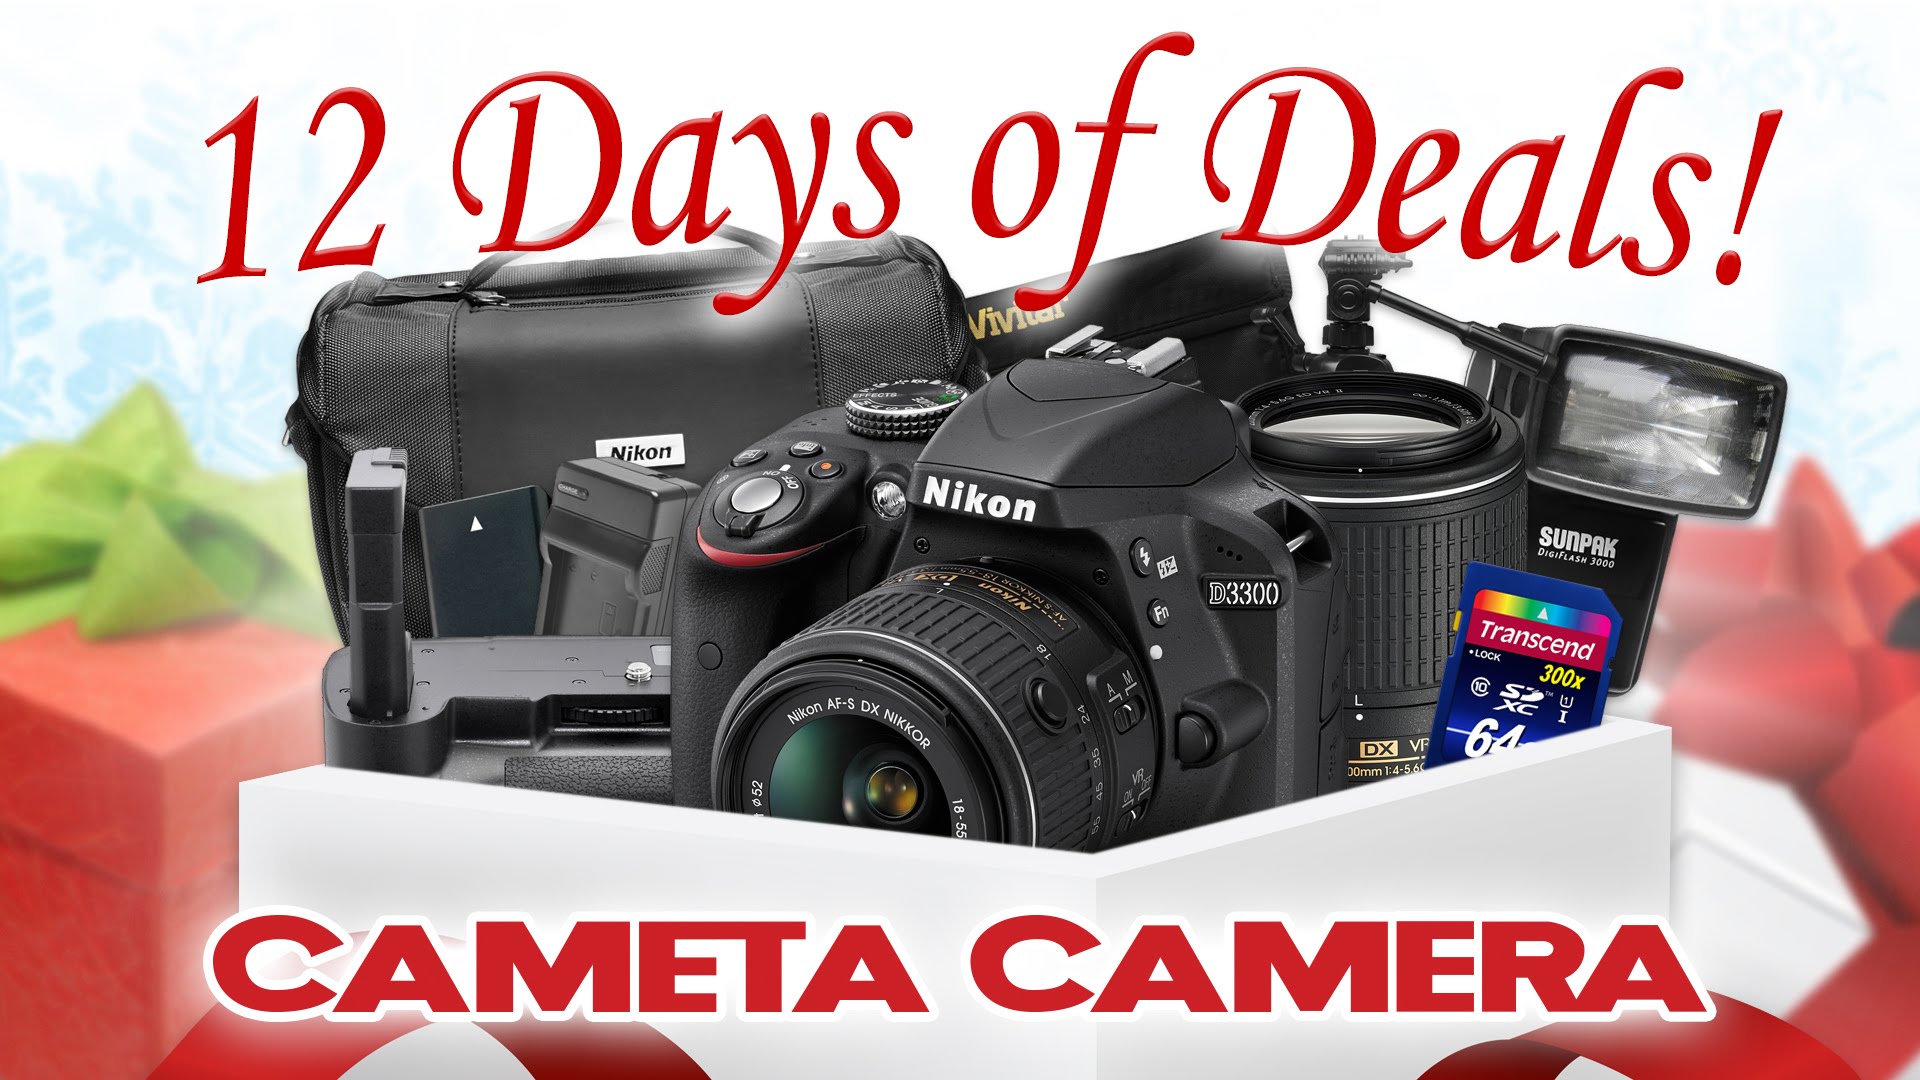 12 Days of Deals – Nikon D3300 Digital SLR Camera & 2 Lenses (Black Friday 2015)